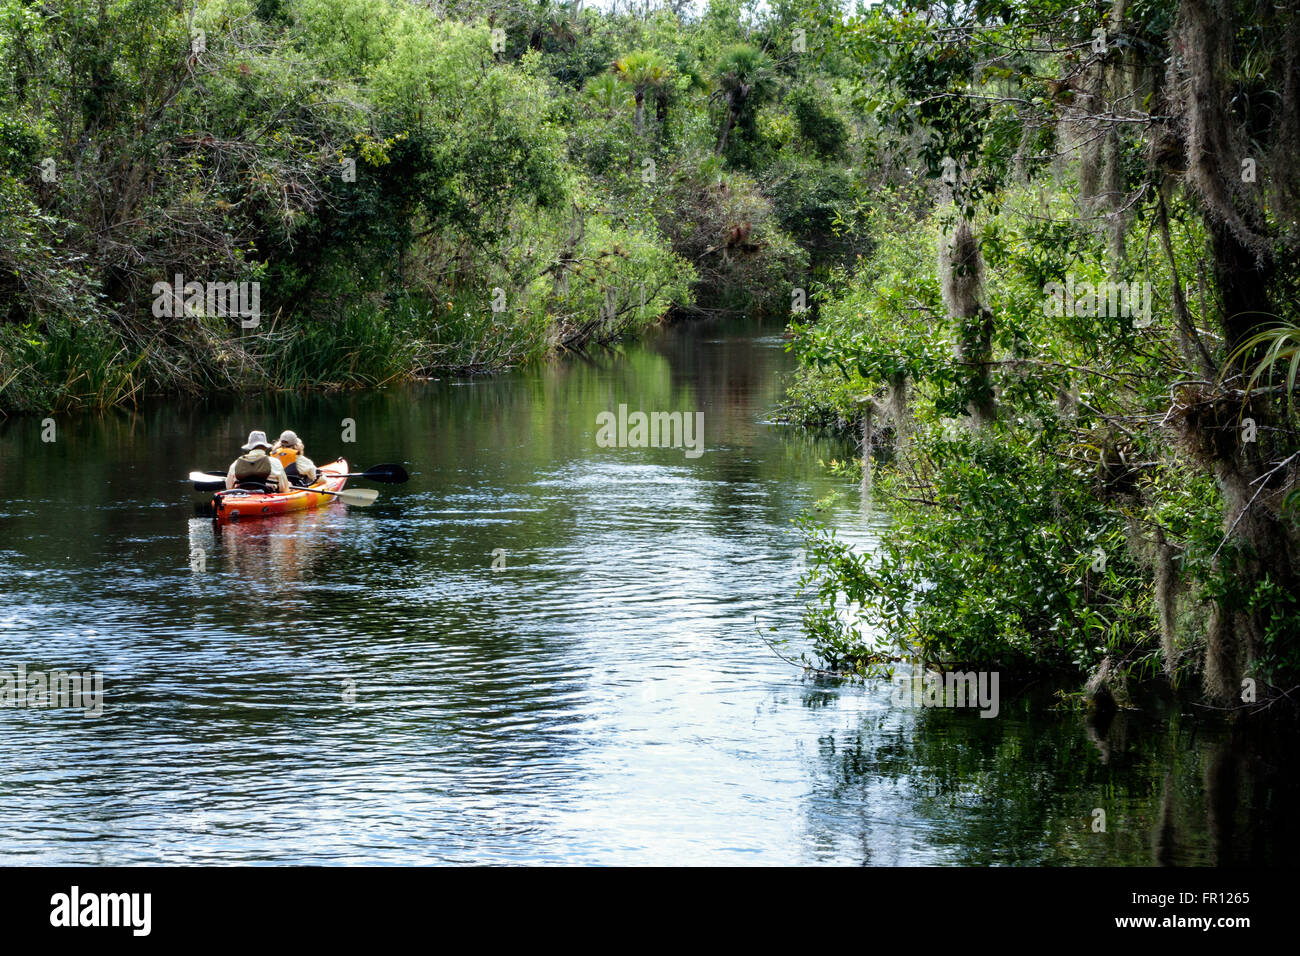 Florida Everglades,Big Cypress National Preserve Park,canoe,paddling,adult,adults,man men male,woman female women,couple,boat,water,natural scenery,FL Stock Photo